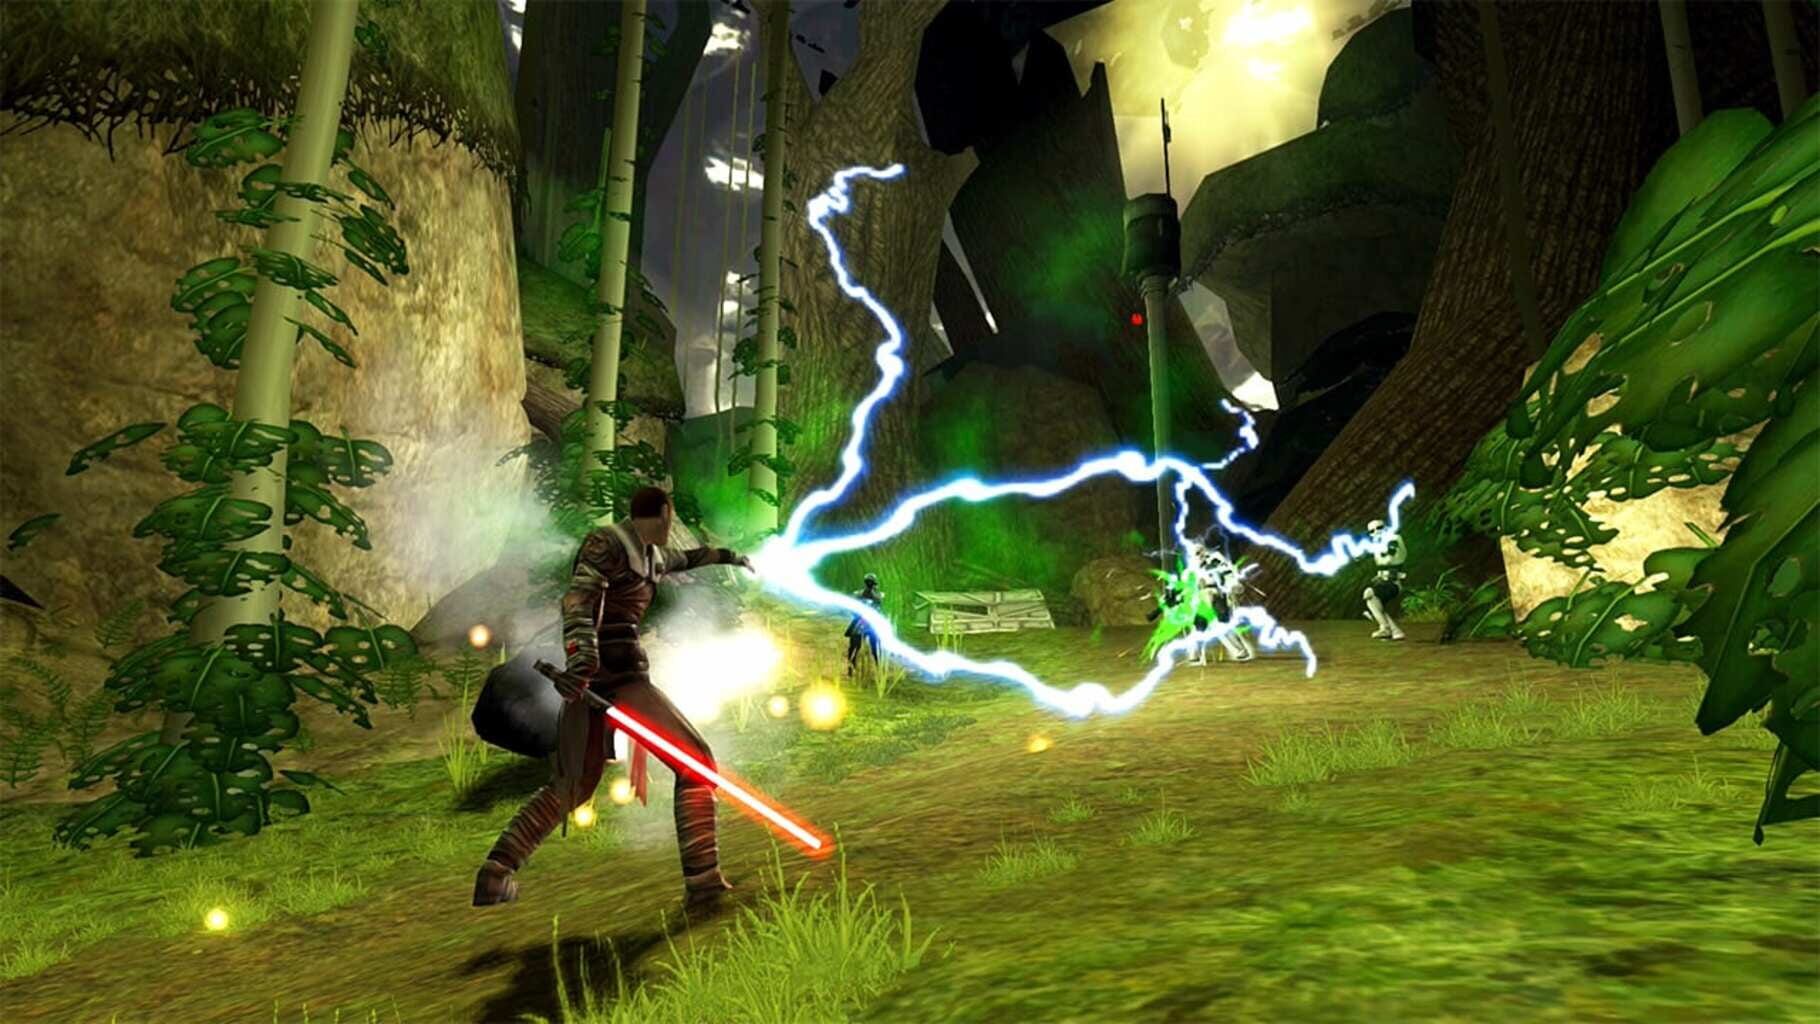 Captura de pantalla - Star Wars: The Force Unleashed